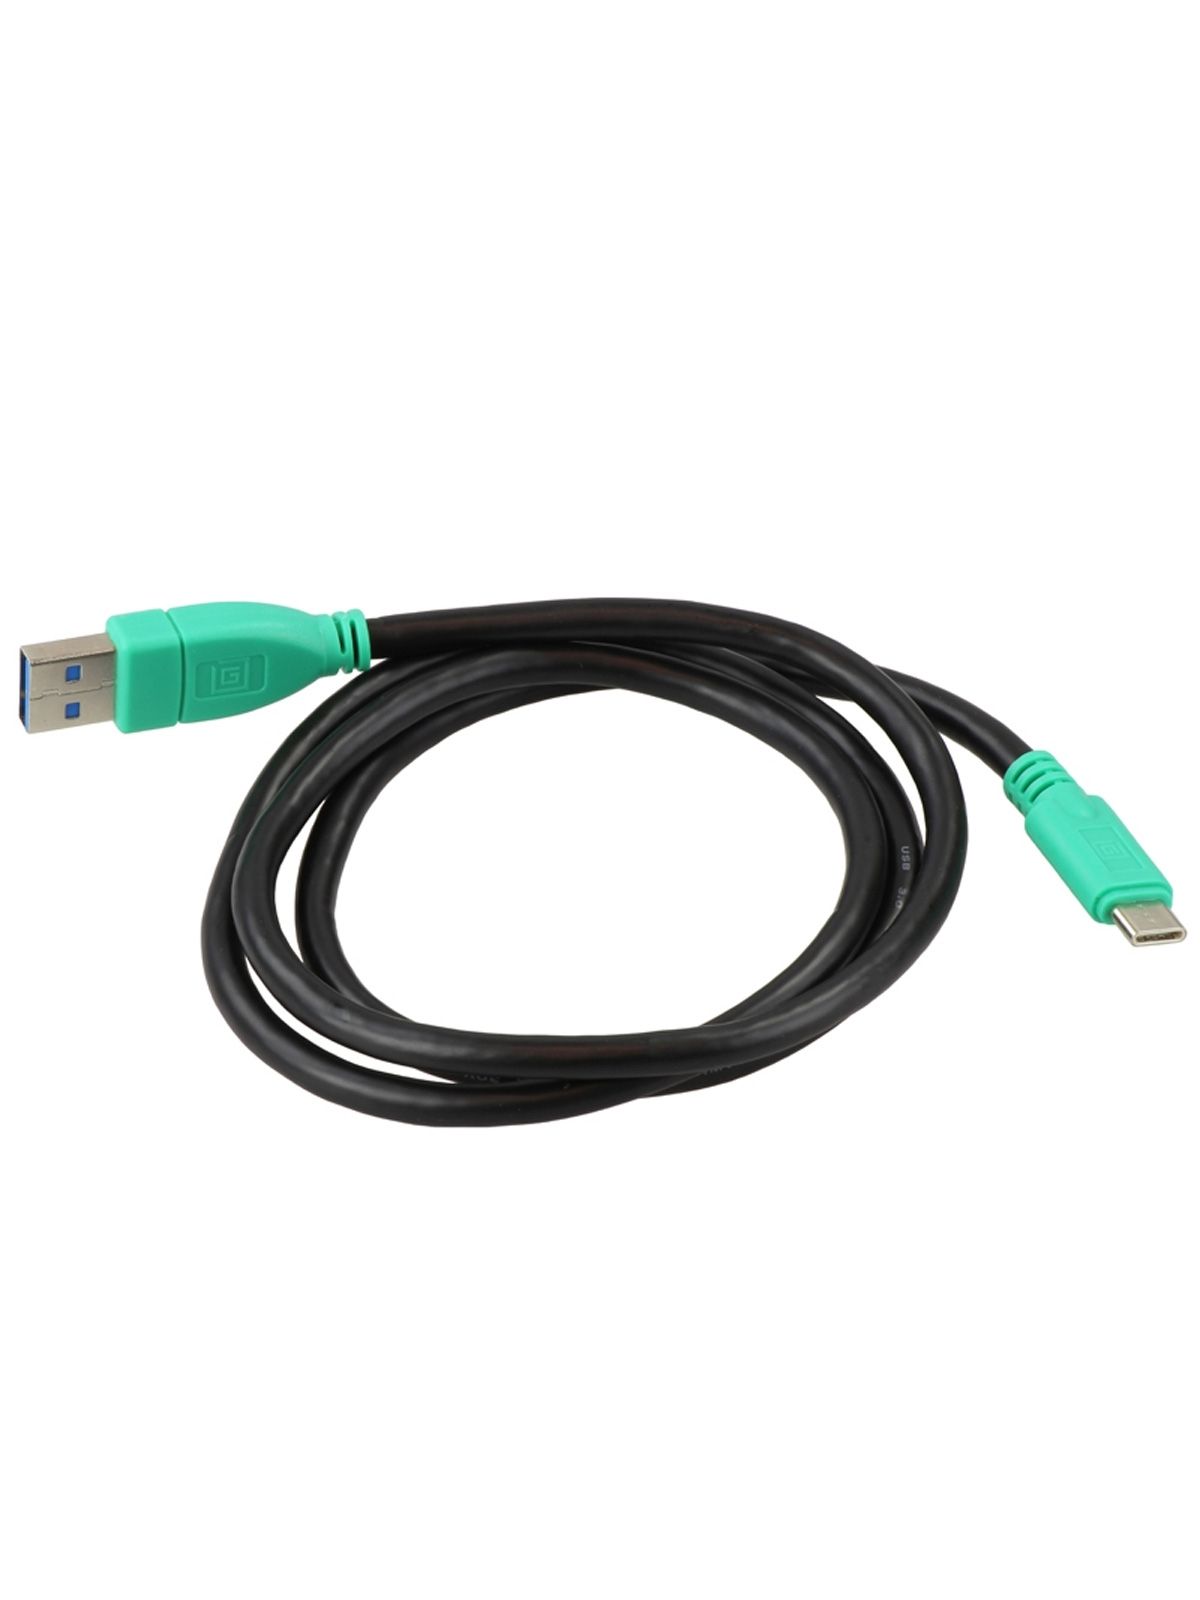 RAM Mounts GDS USB-Kabel - USB-A / USB-C (3.0), ca. 100 cm lang